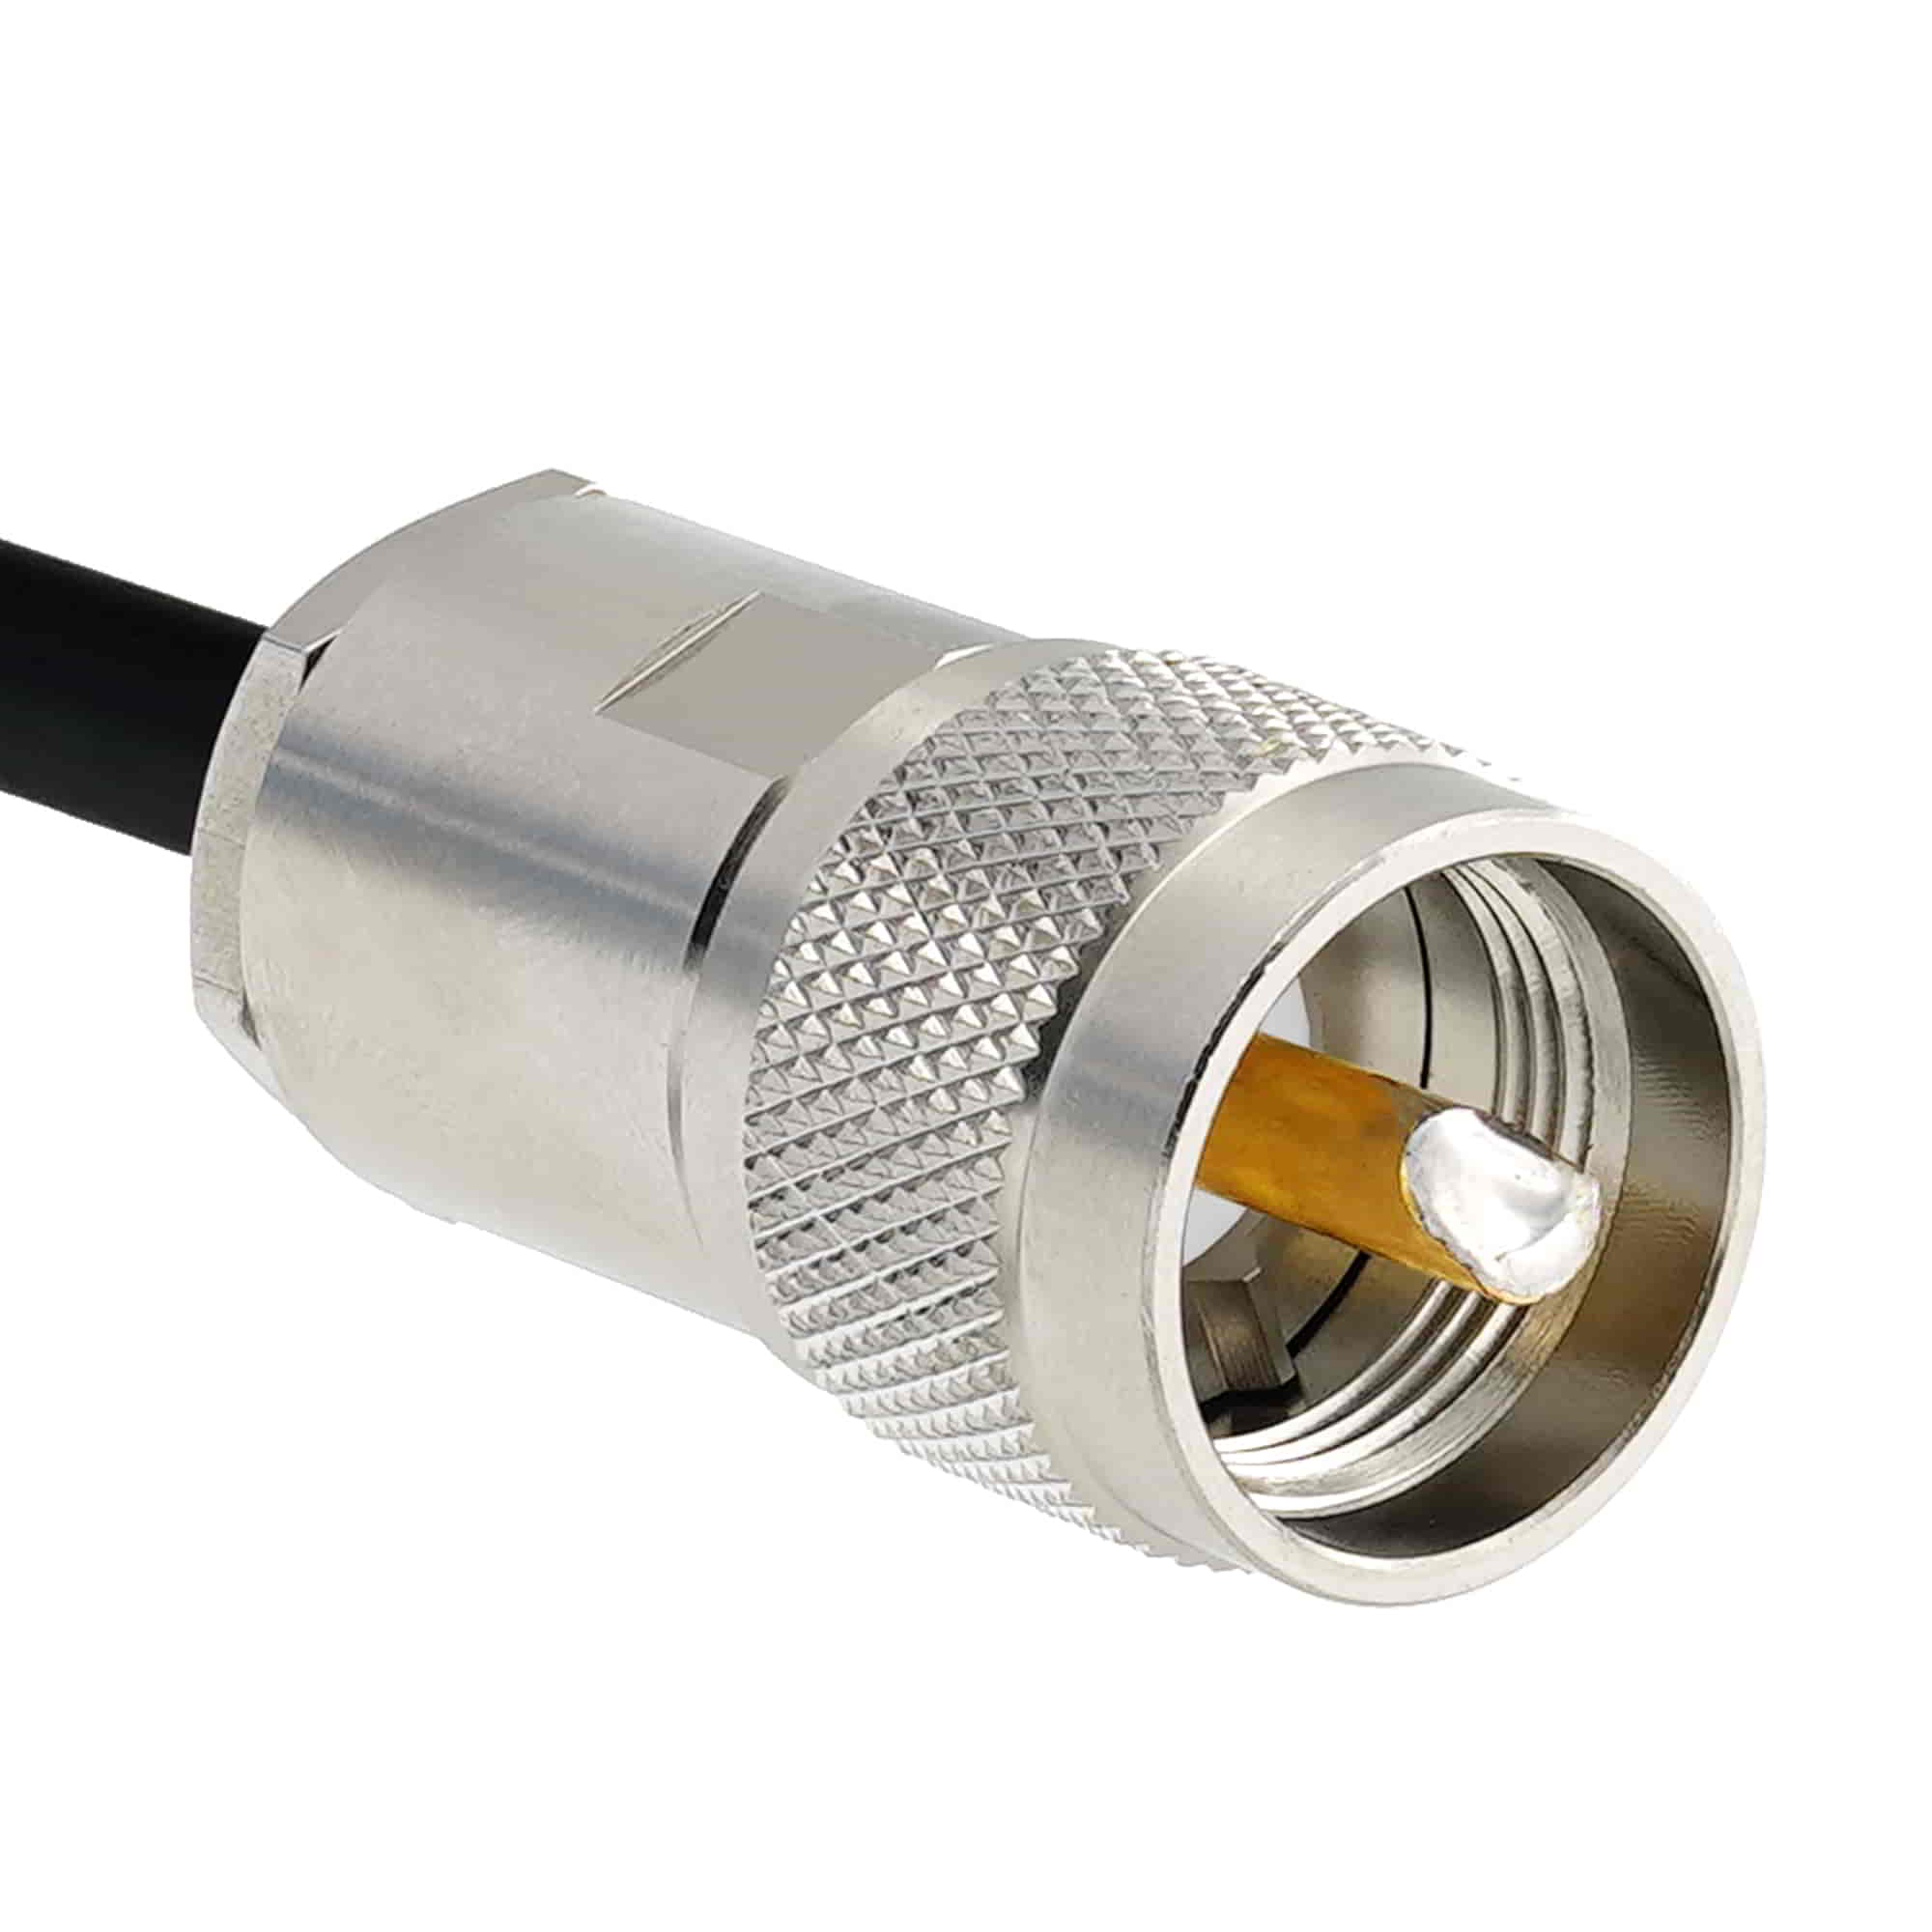 PL259 UHF Clamp/Screw Connector for 5D-FB, LMR300, RG59, RG-6U